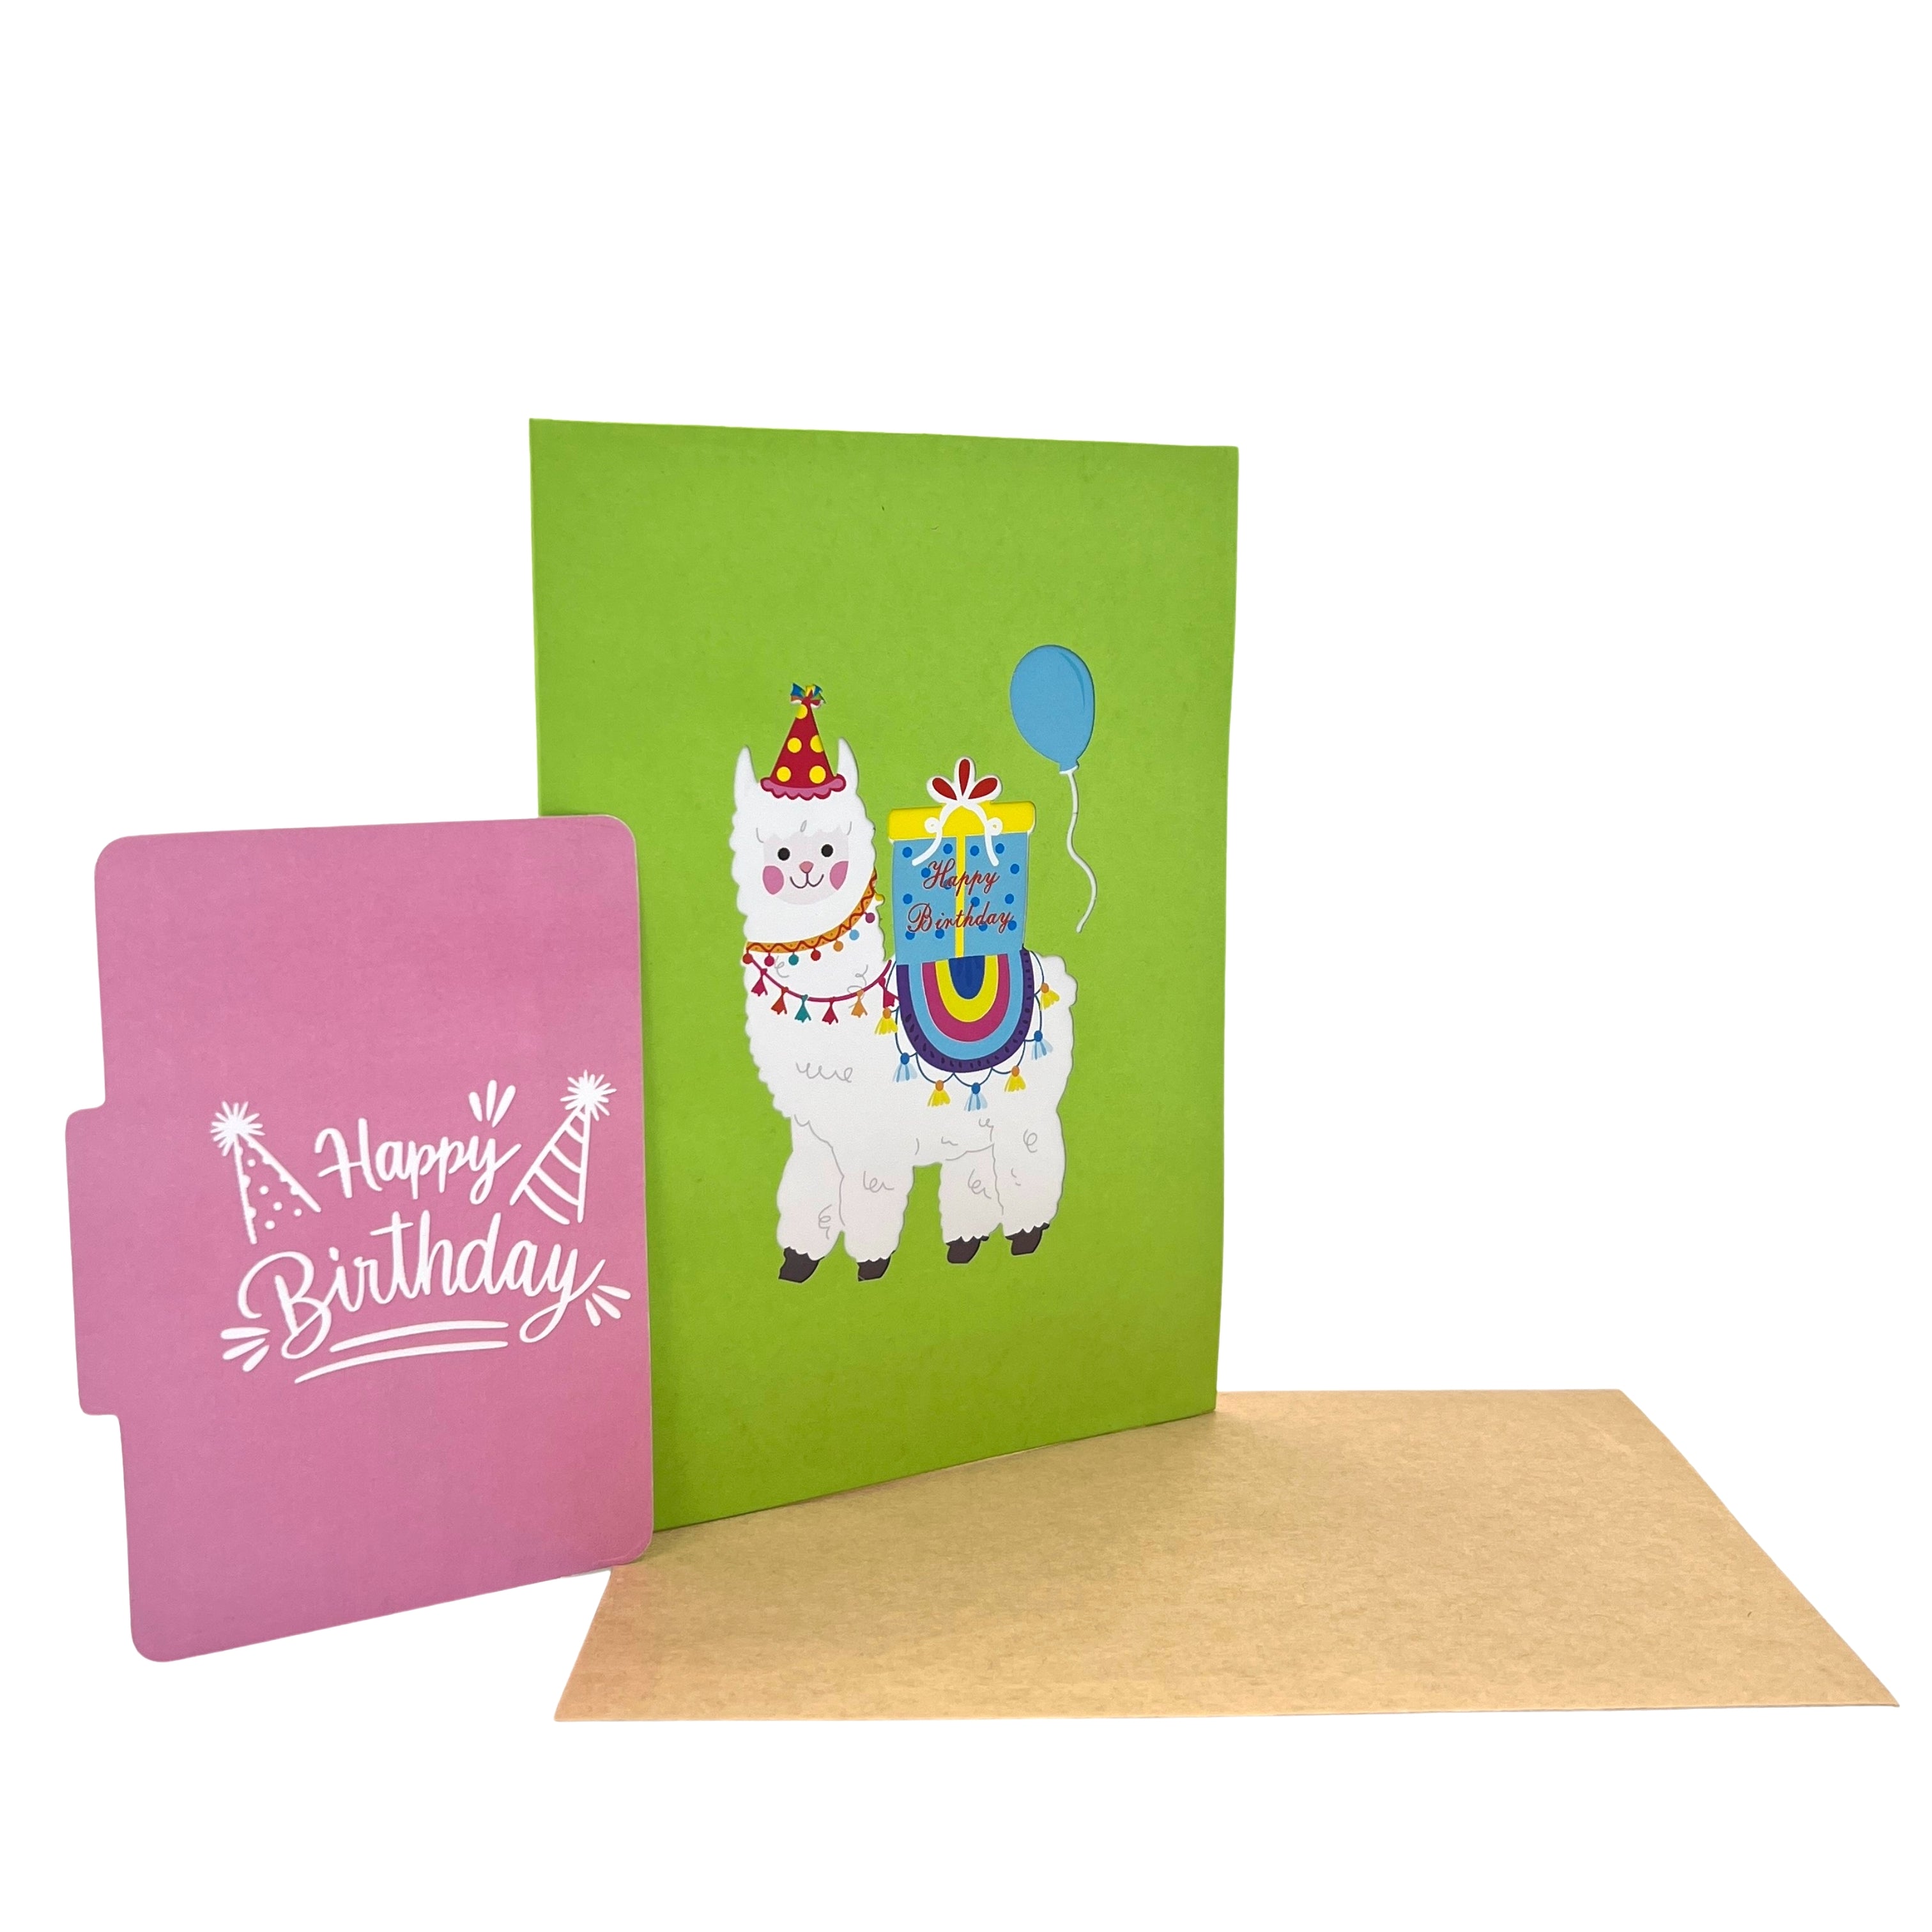 Pop Up Greeting Card White Alpaca Happy Birthday Card Animal Alpaca Nature Card, Thank you Birthday Card for Kid Children Family Friend